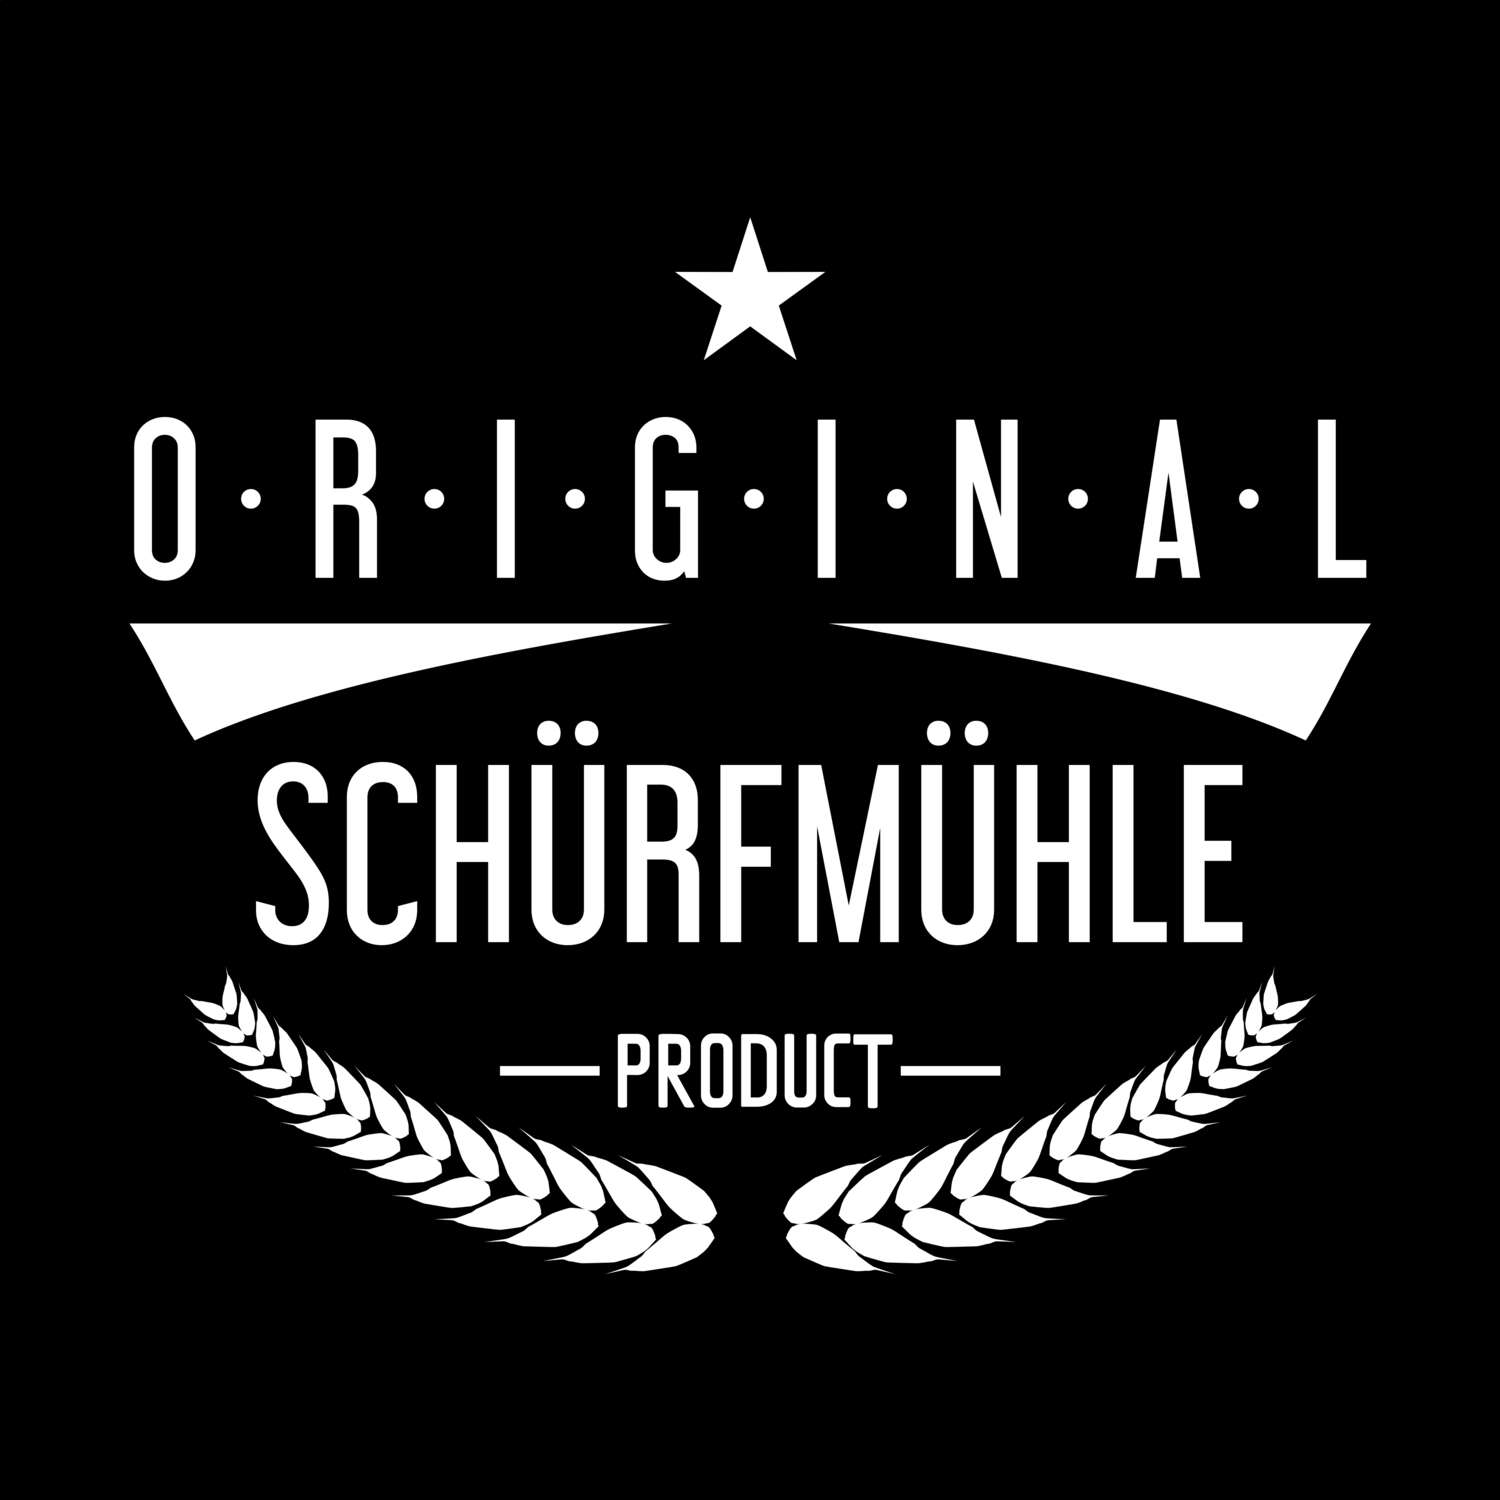 Schürfmühle T-Shirt »Original Product«